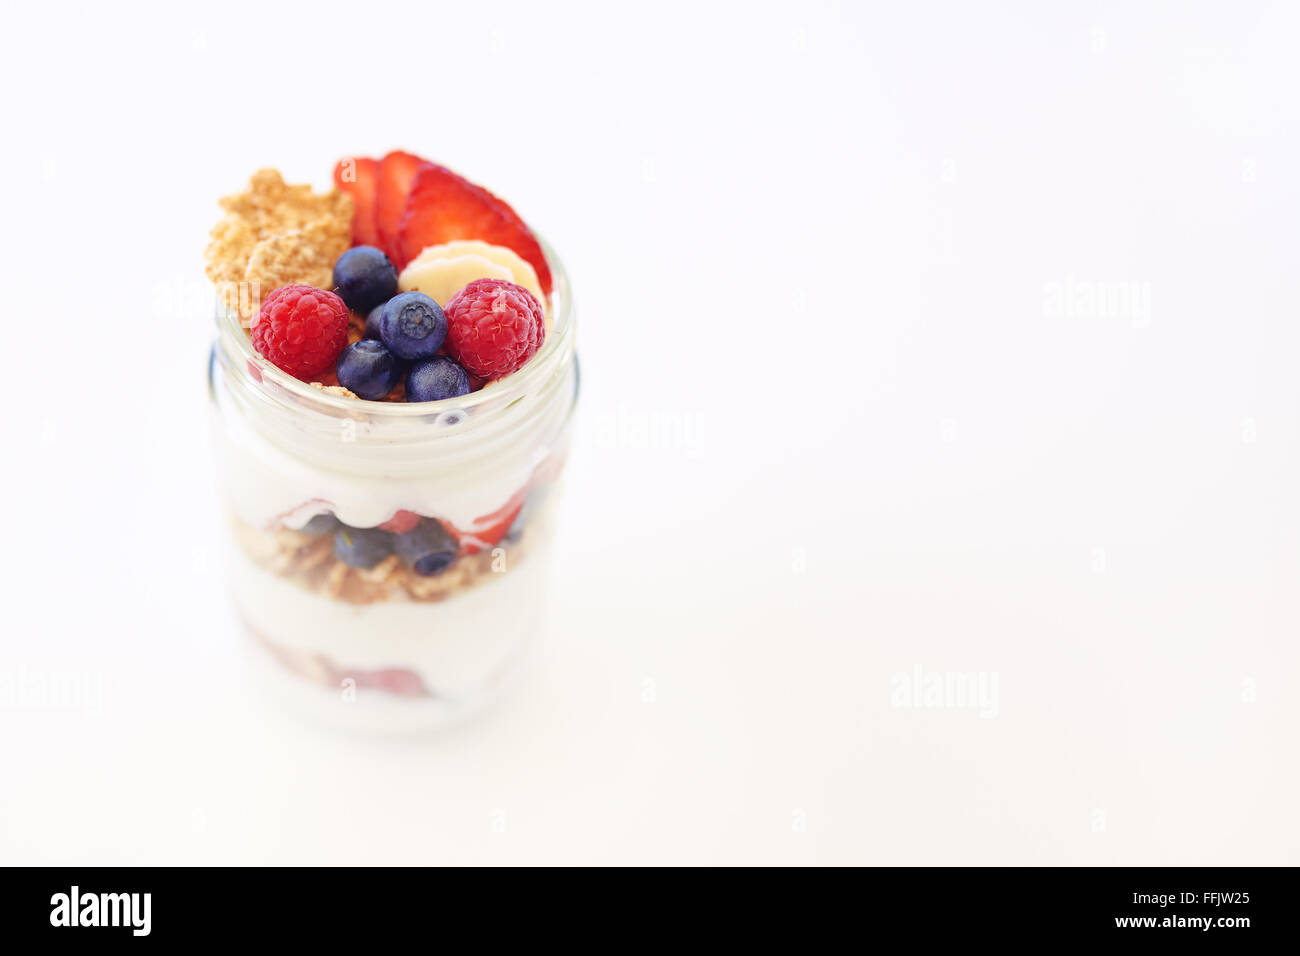 Yogurt, berries and cereal breakfast Stock Photo